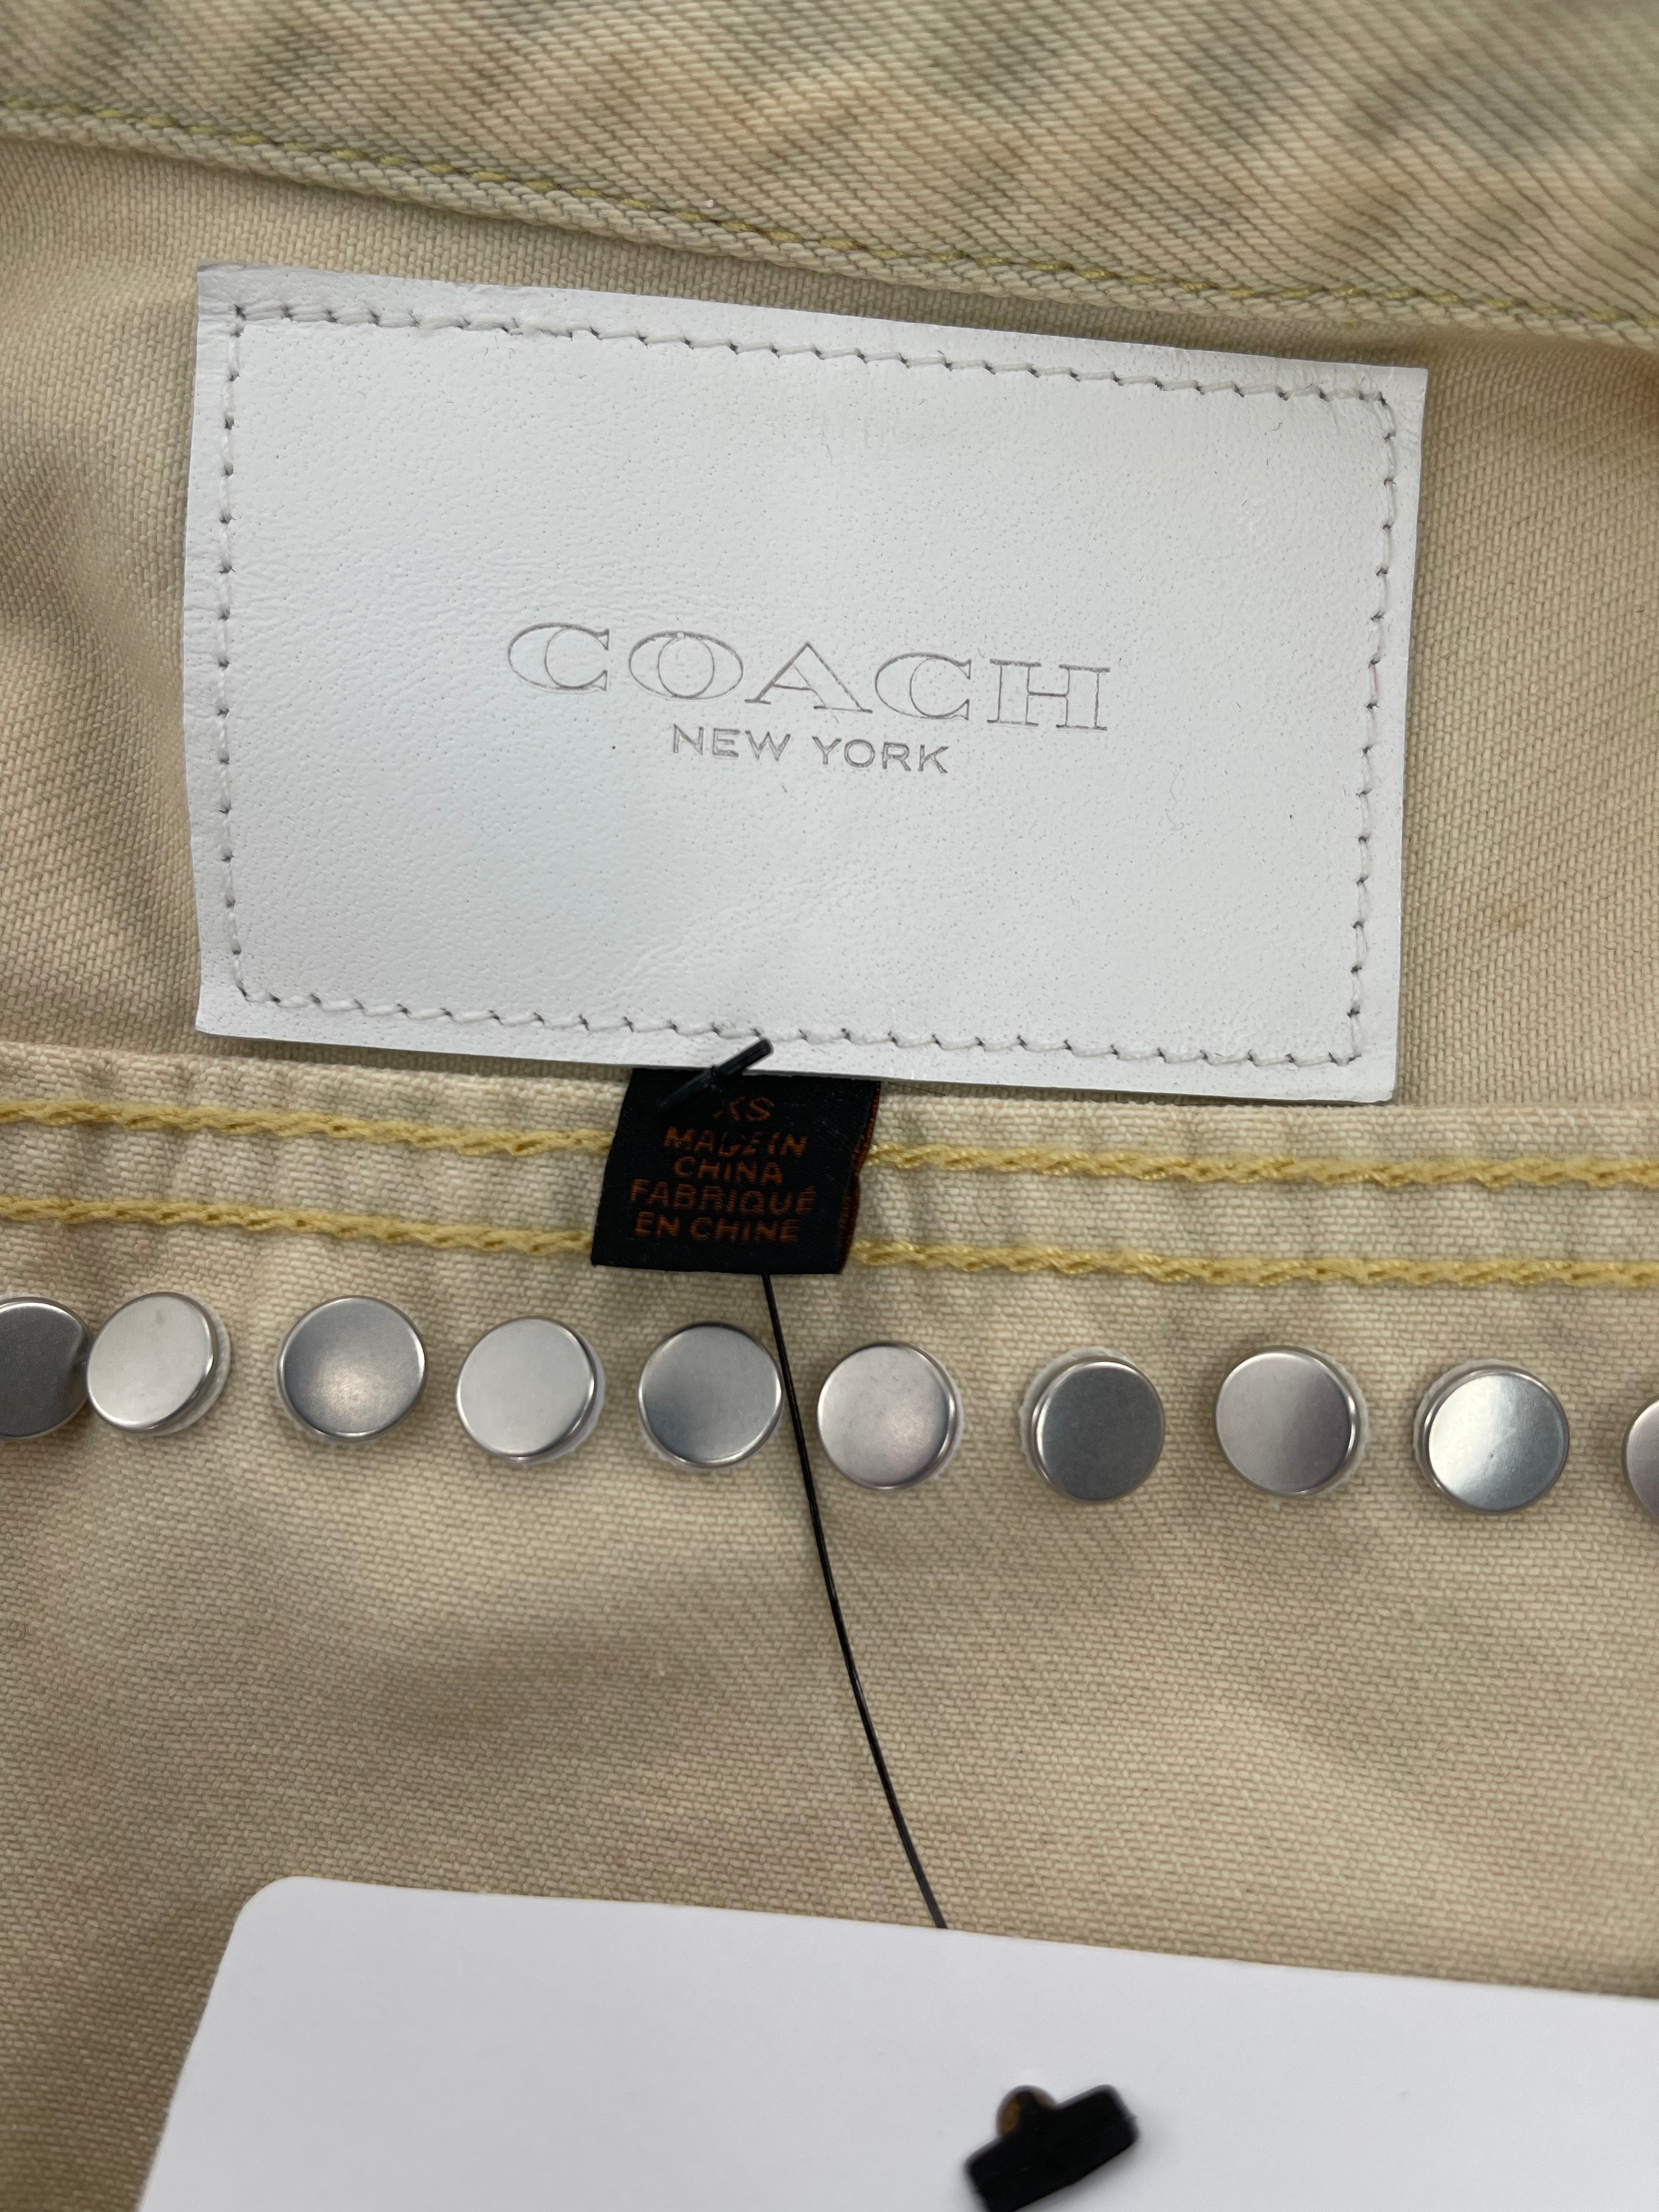 Coach Jacket with faint discoloration